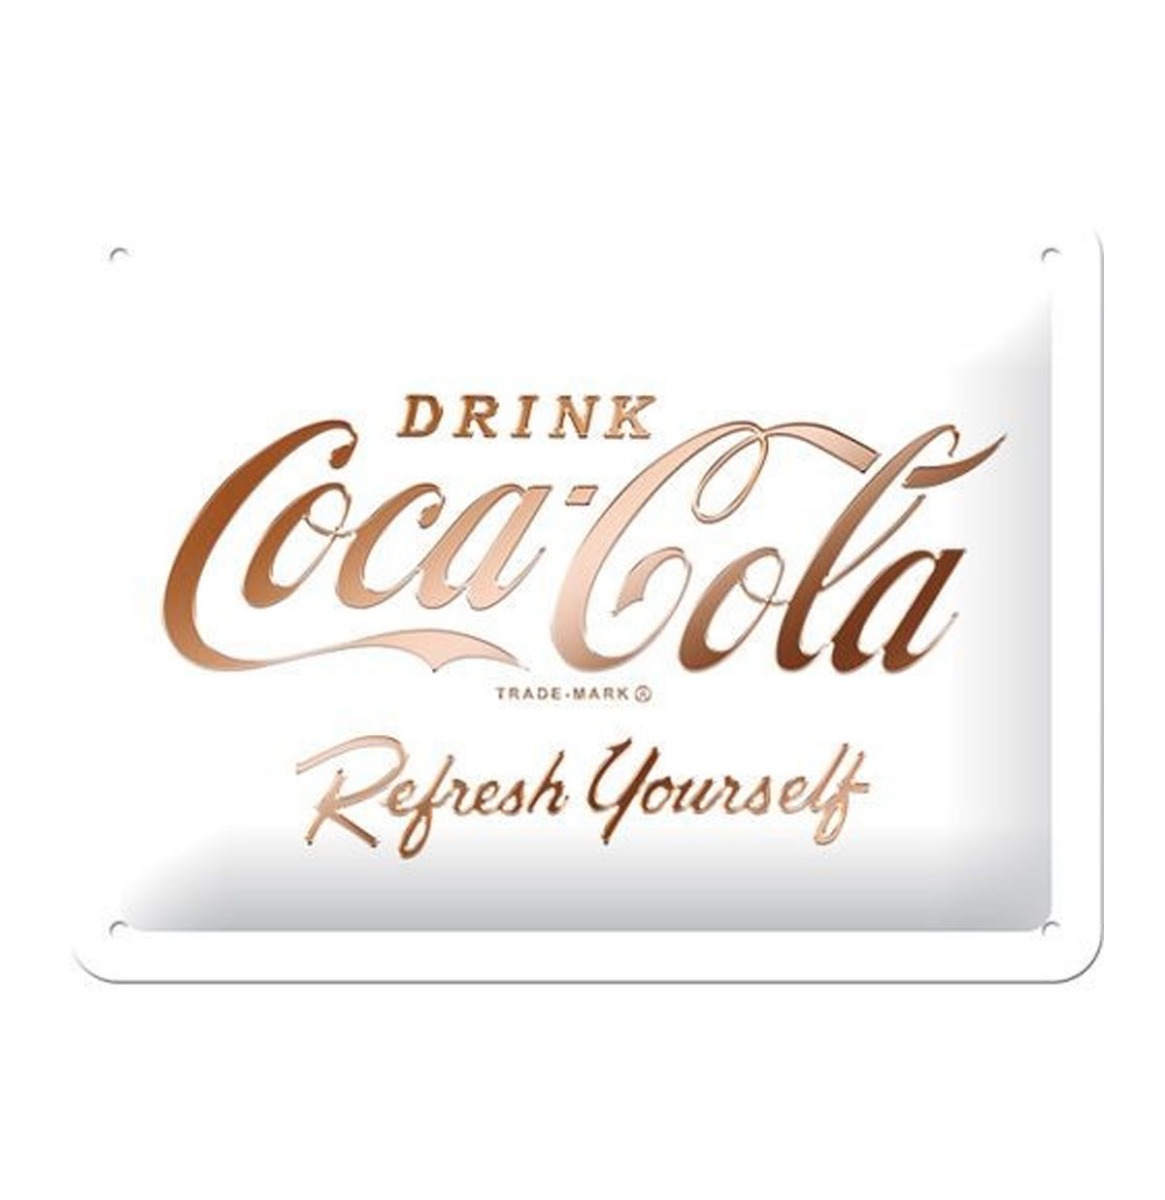 Coca Cola Refresh Yourself Metalen Bord Met Reliëf 15 x 20 cm